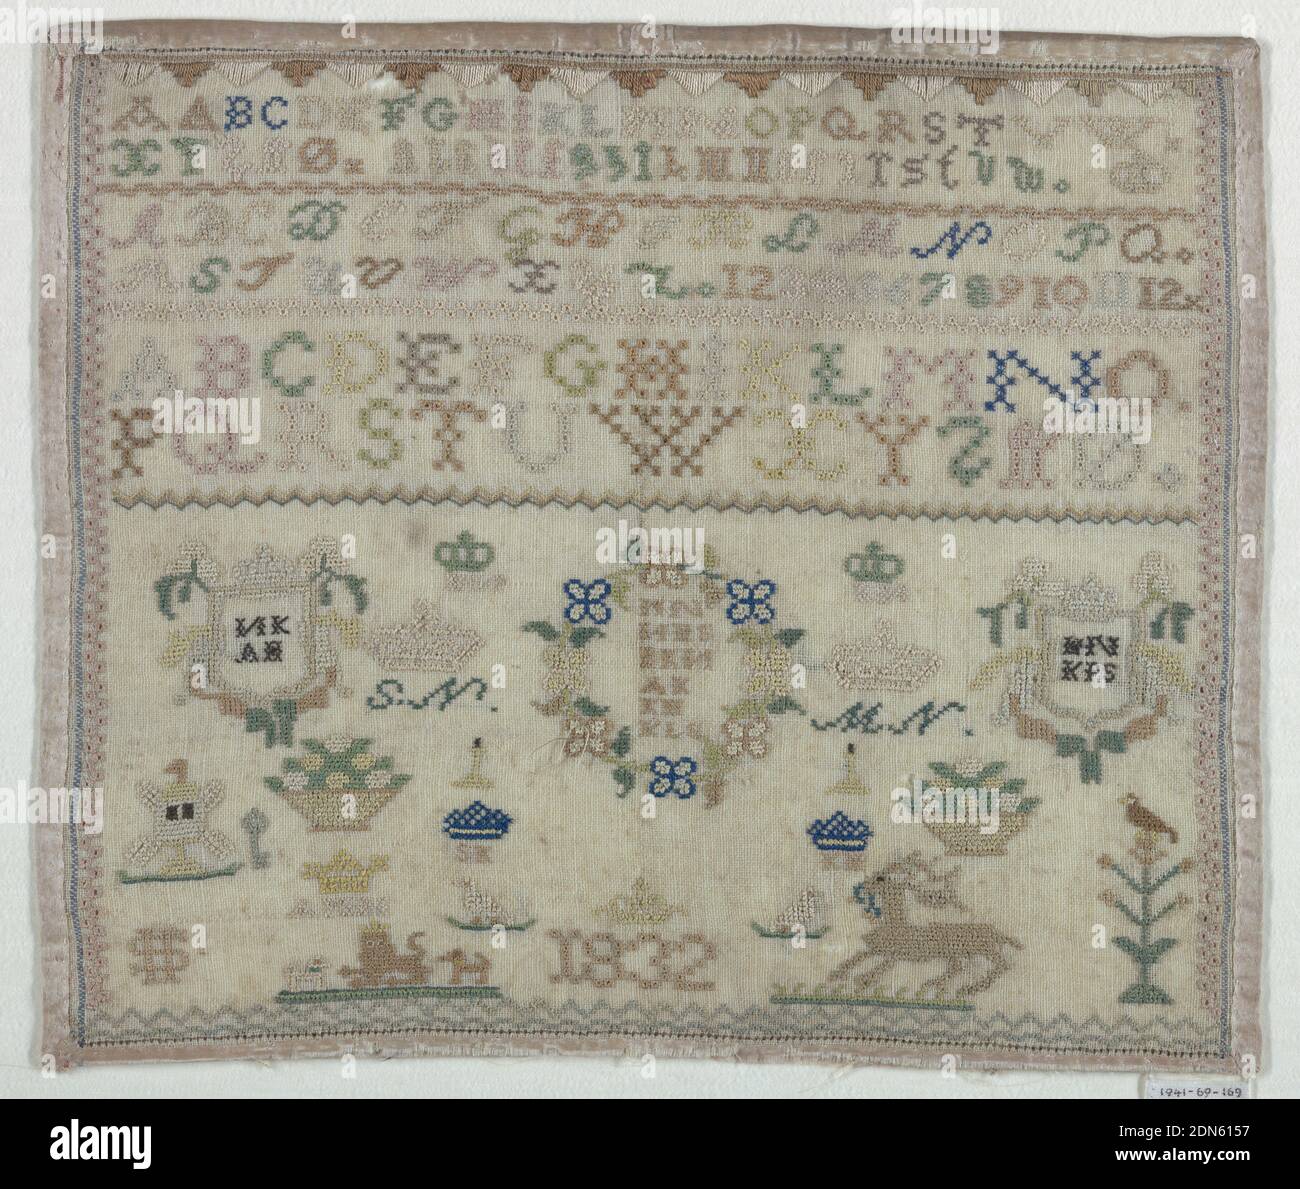 Lovely Beige Vintage Round Tablecloth Cross-Stitched Floral Pattern Eyelet  Bordr